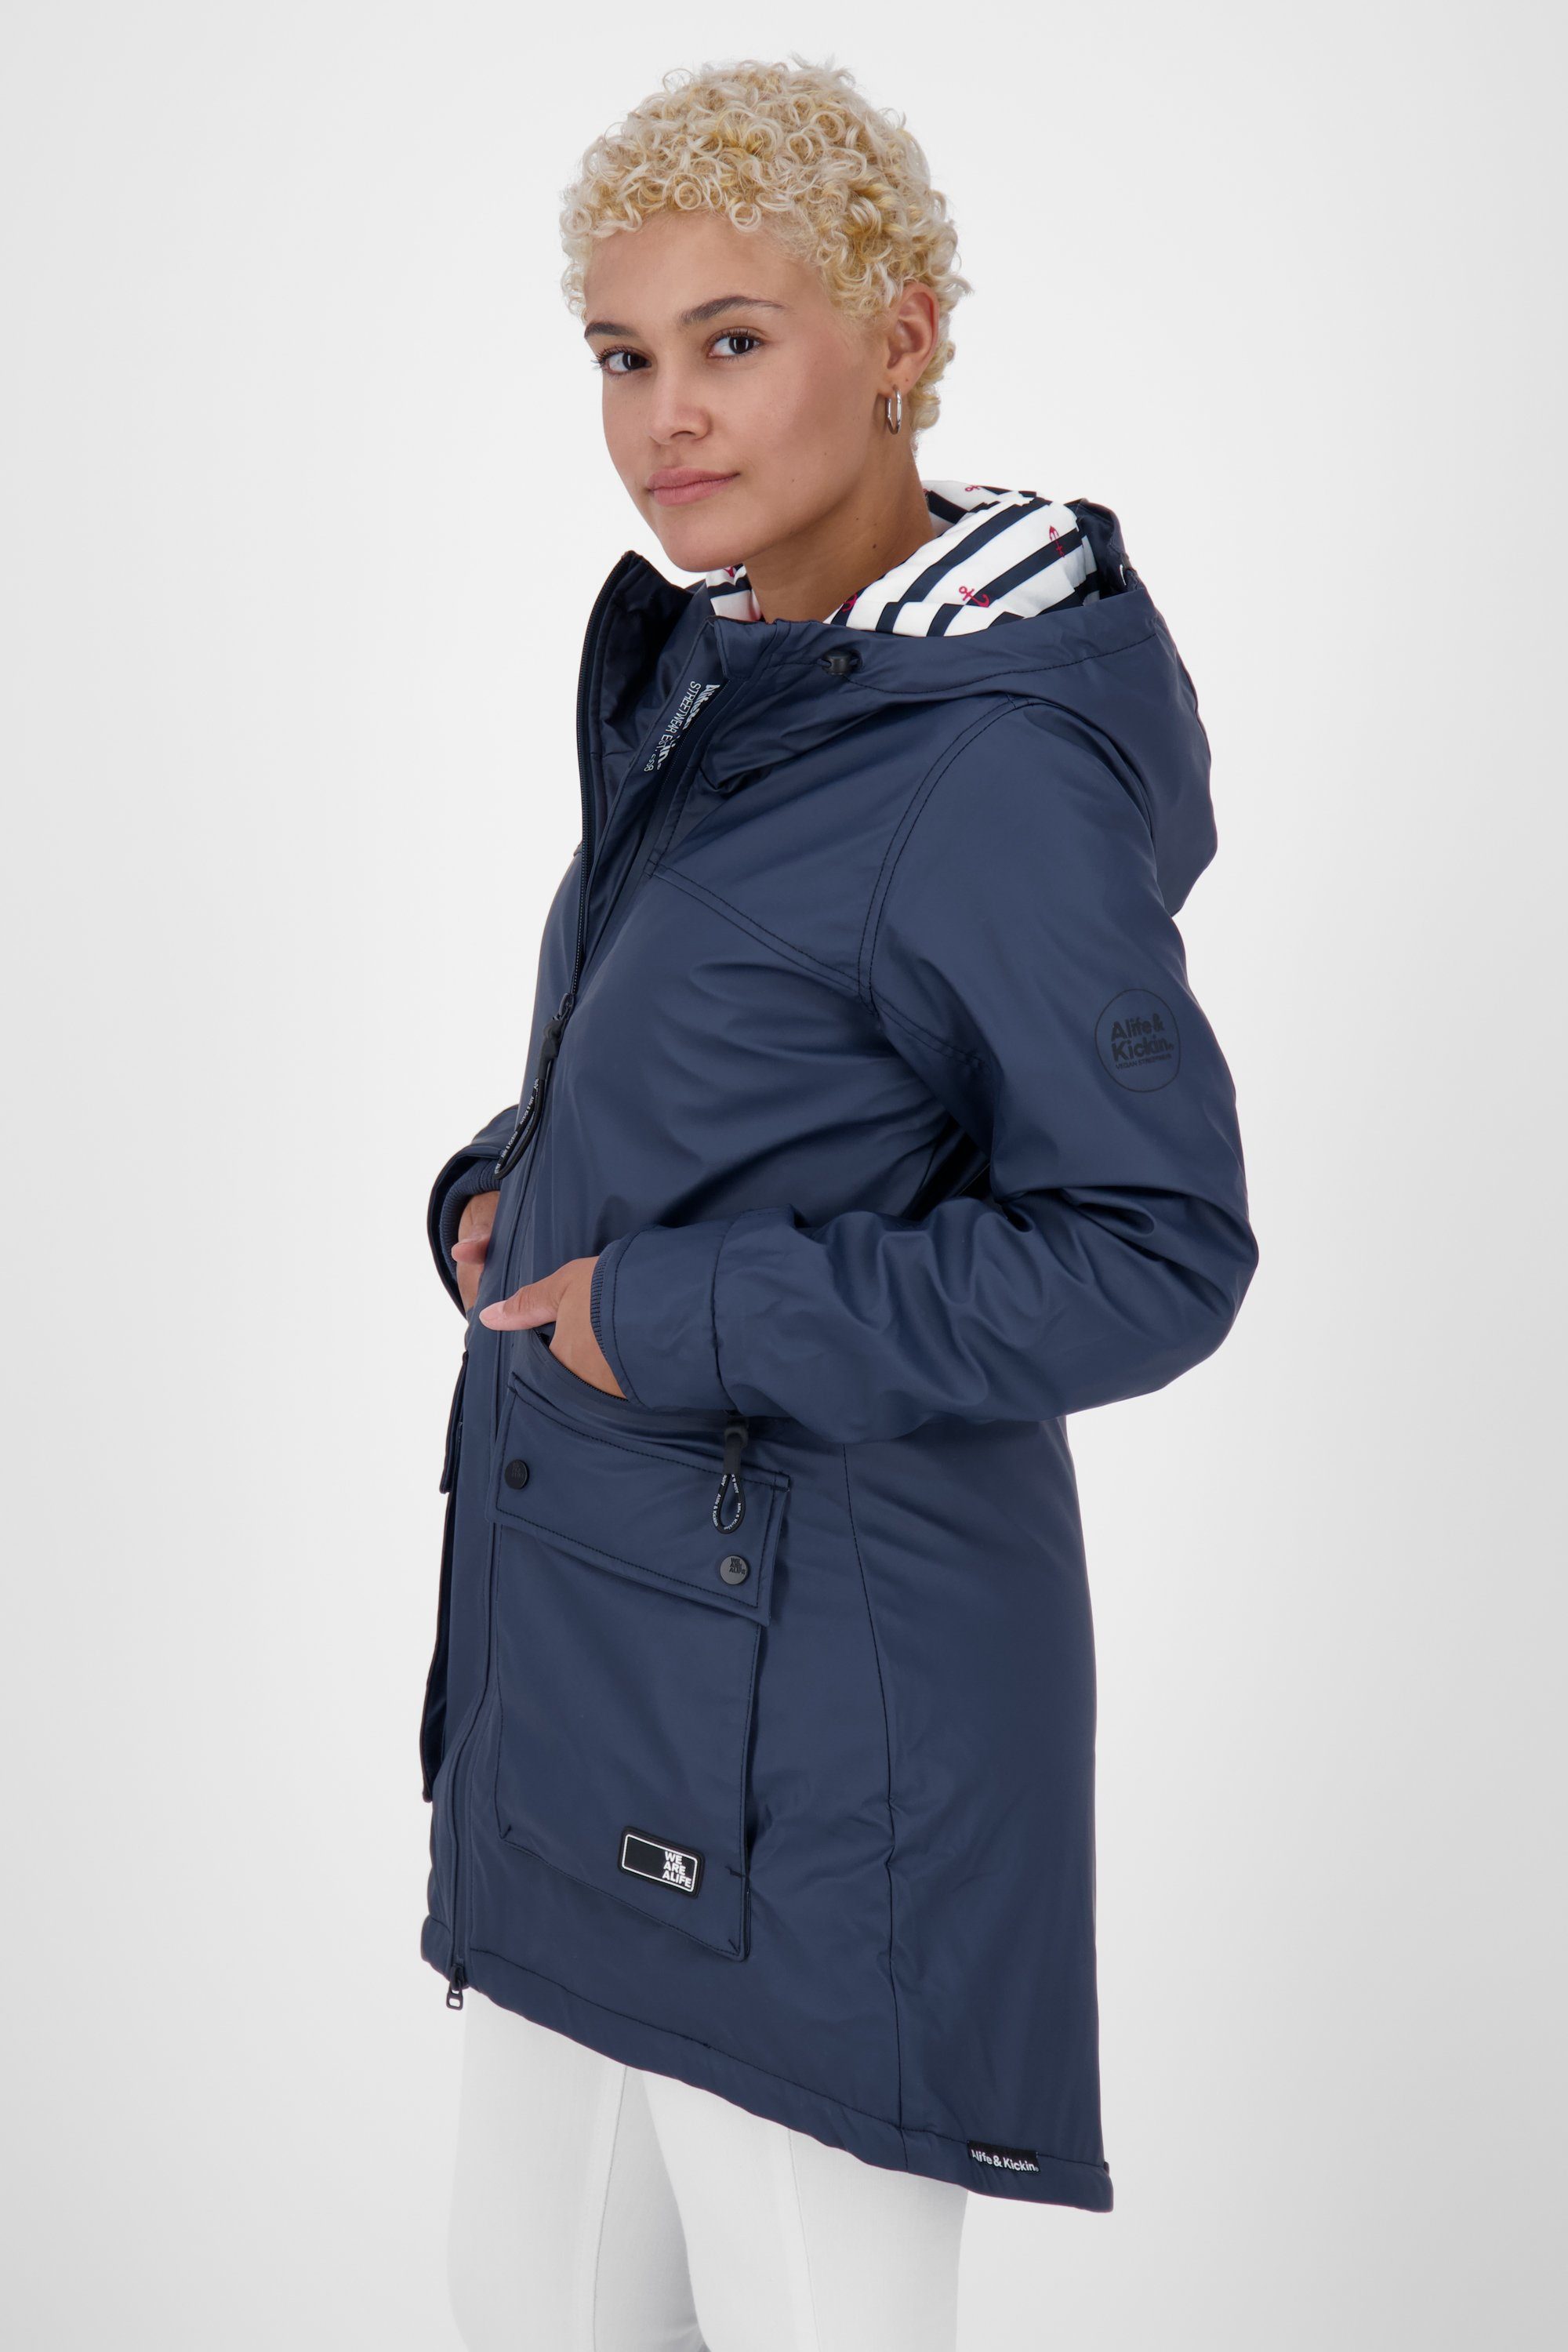 Kickin Alife & Damen Langjacke A AudreyAK Langjacke, Übergangsjacke marine Rainstyle Coat